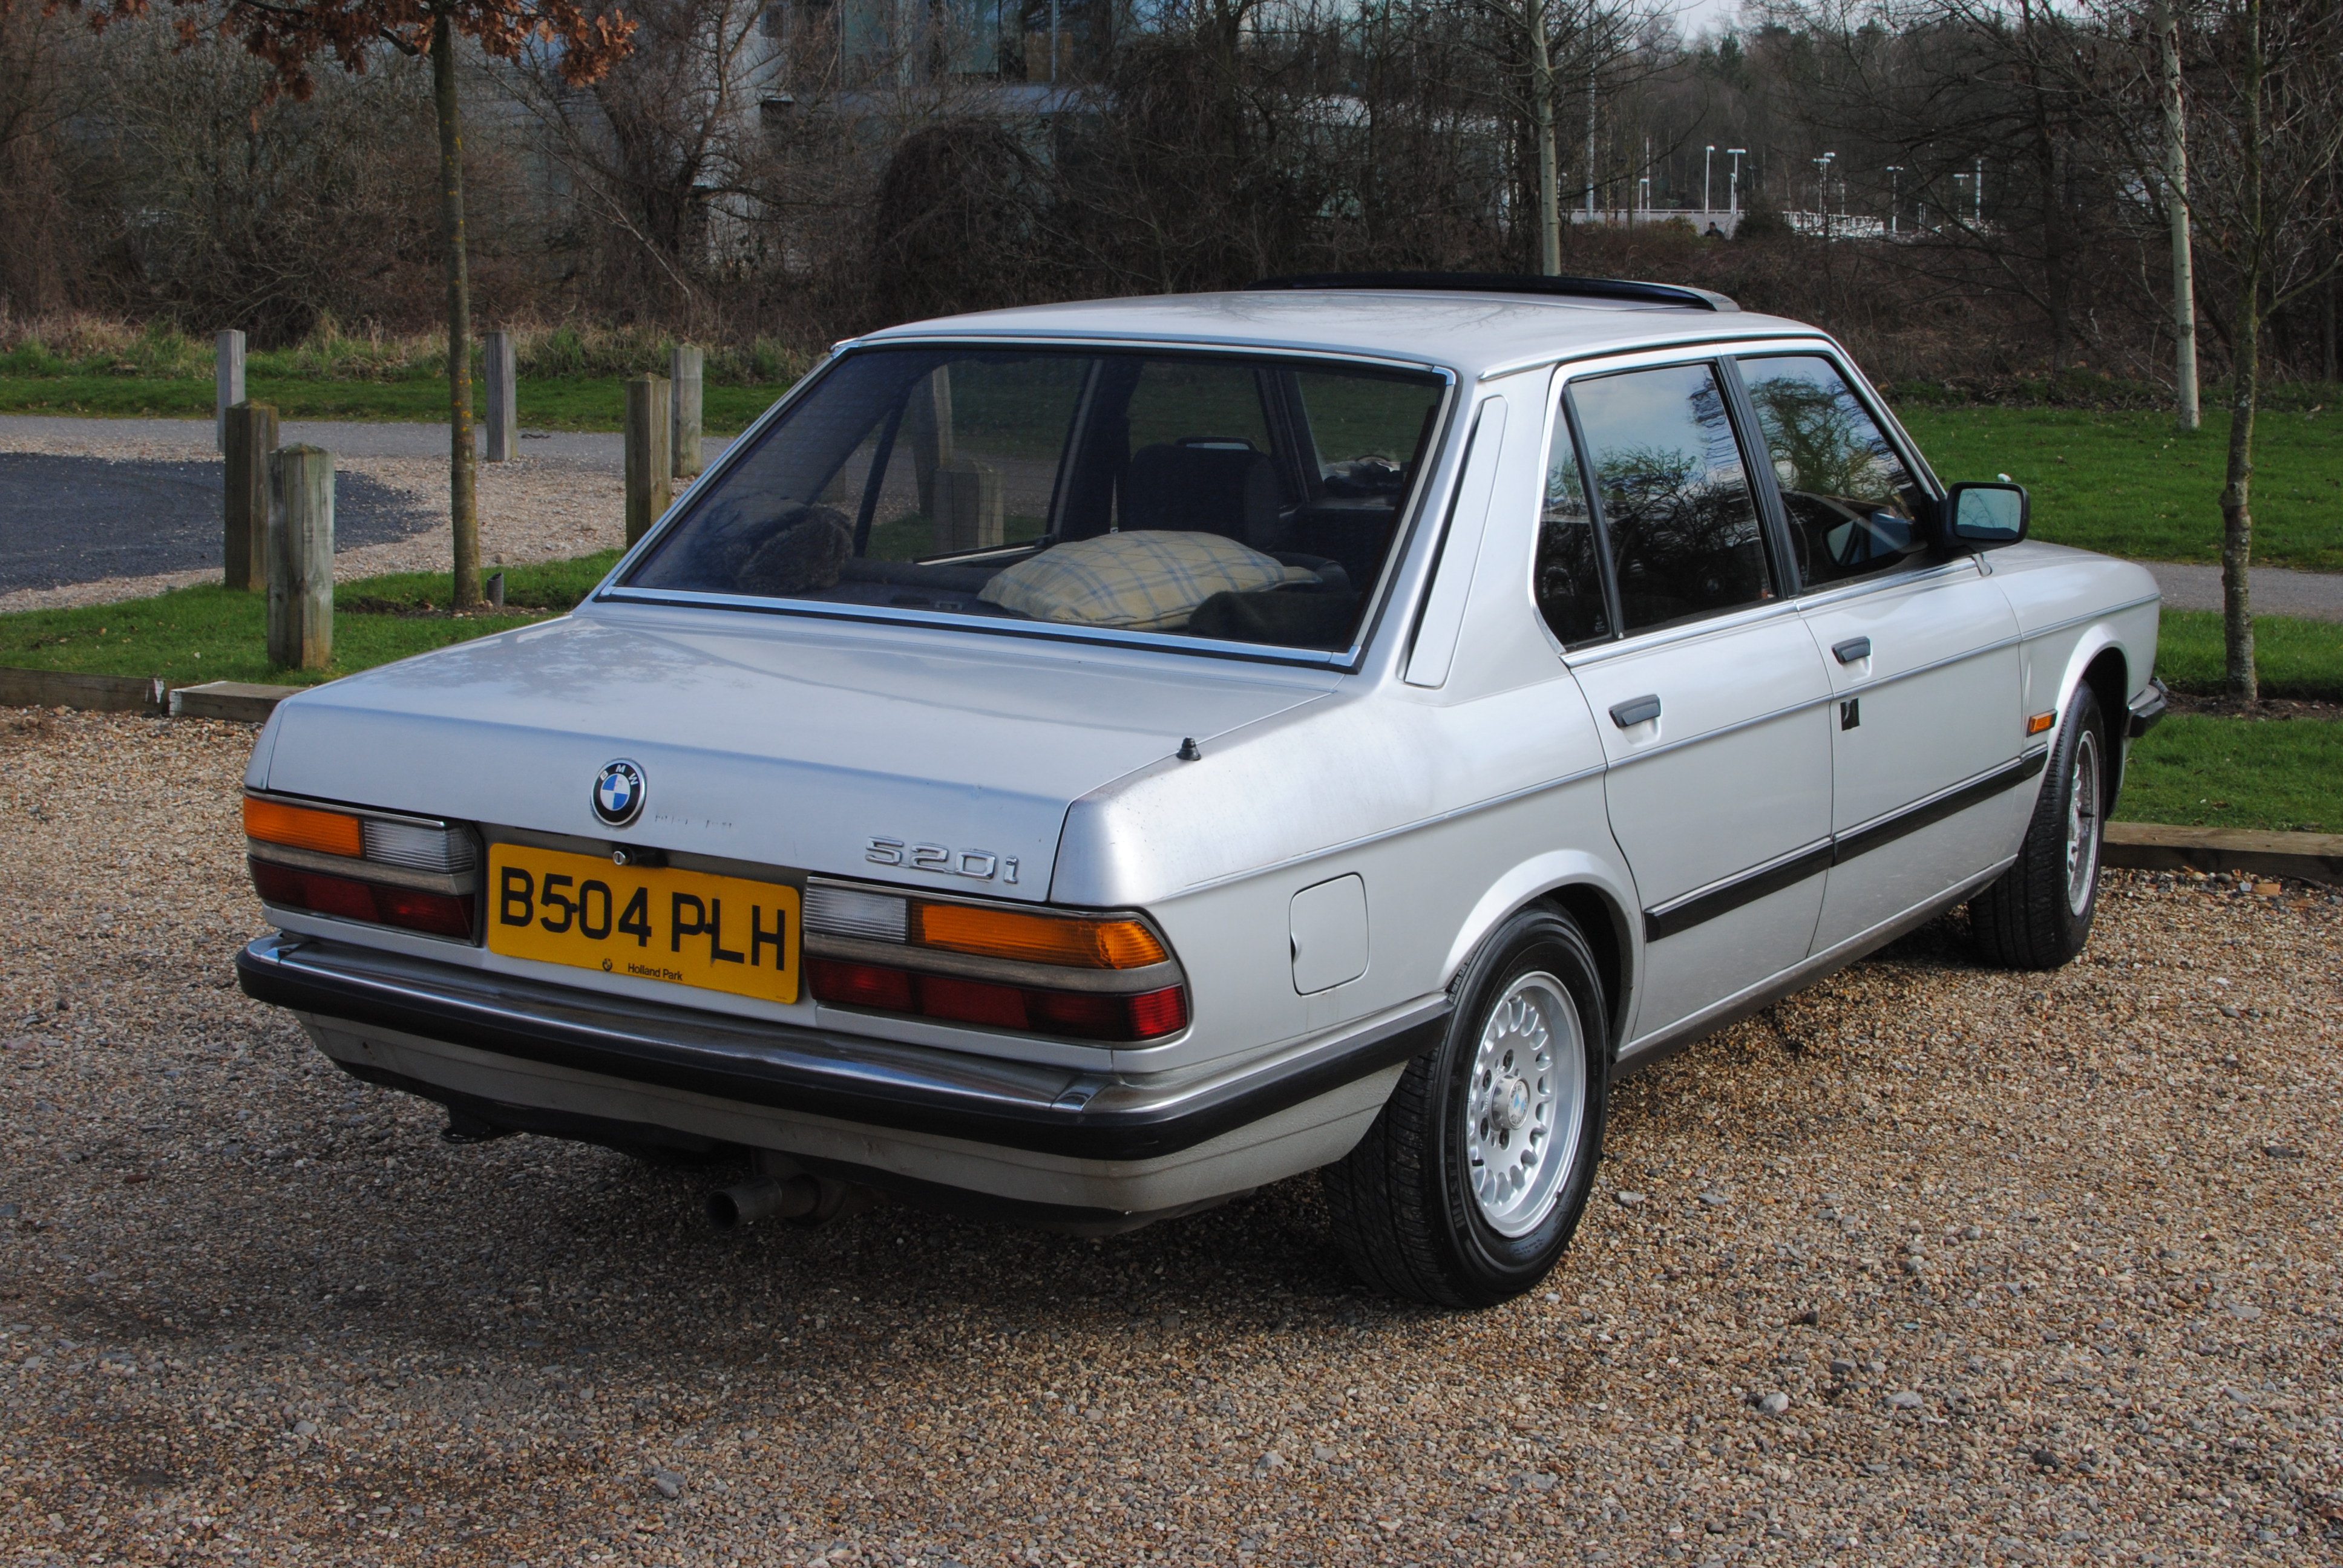 1985 BMW 520i | Flickr - Photo Sharing!